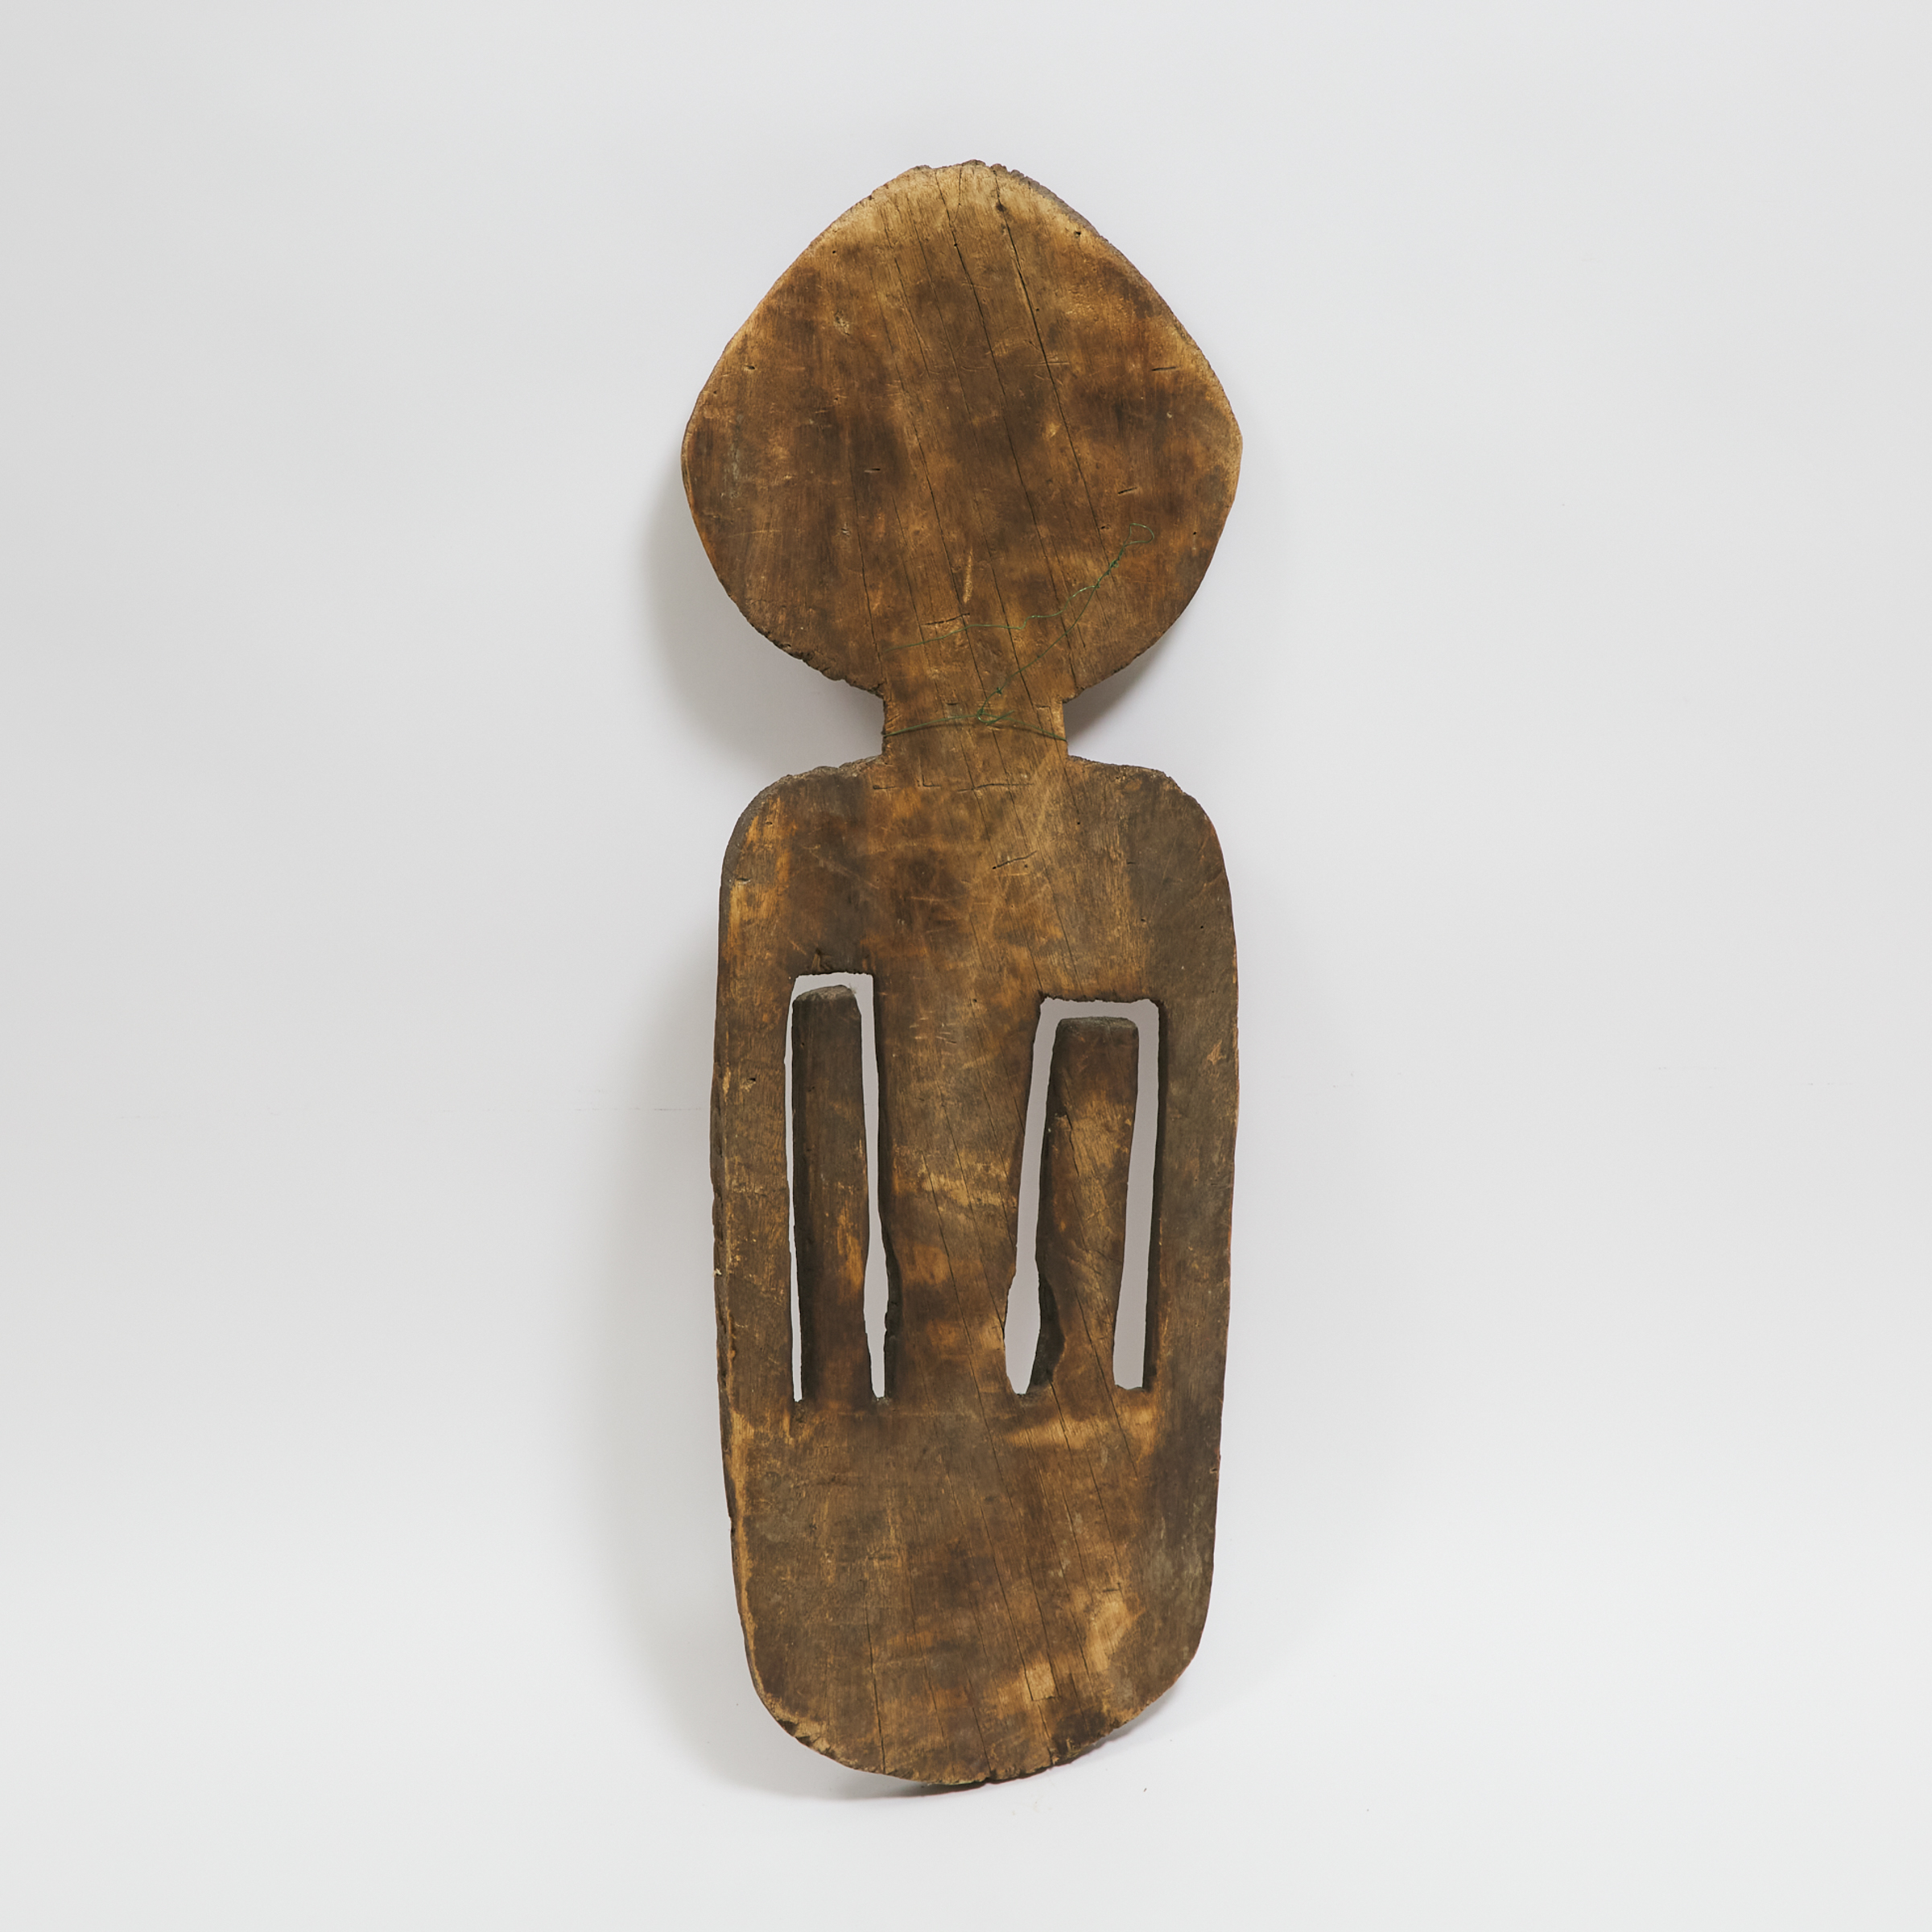 Large Agiba or "Skull Hook" Figure, Kerewa People, Papuan Gulf, Papua New Guinea, mid 20th century